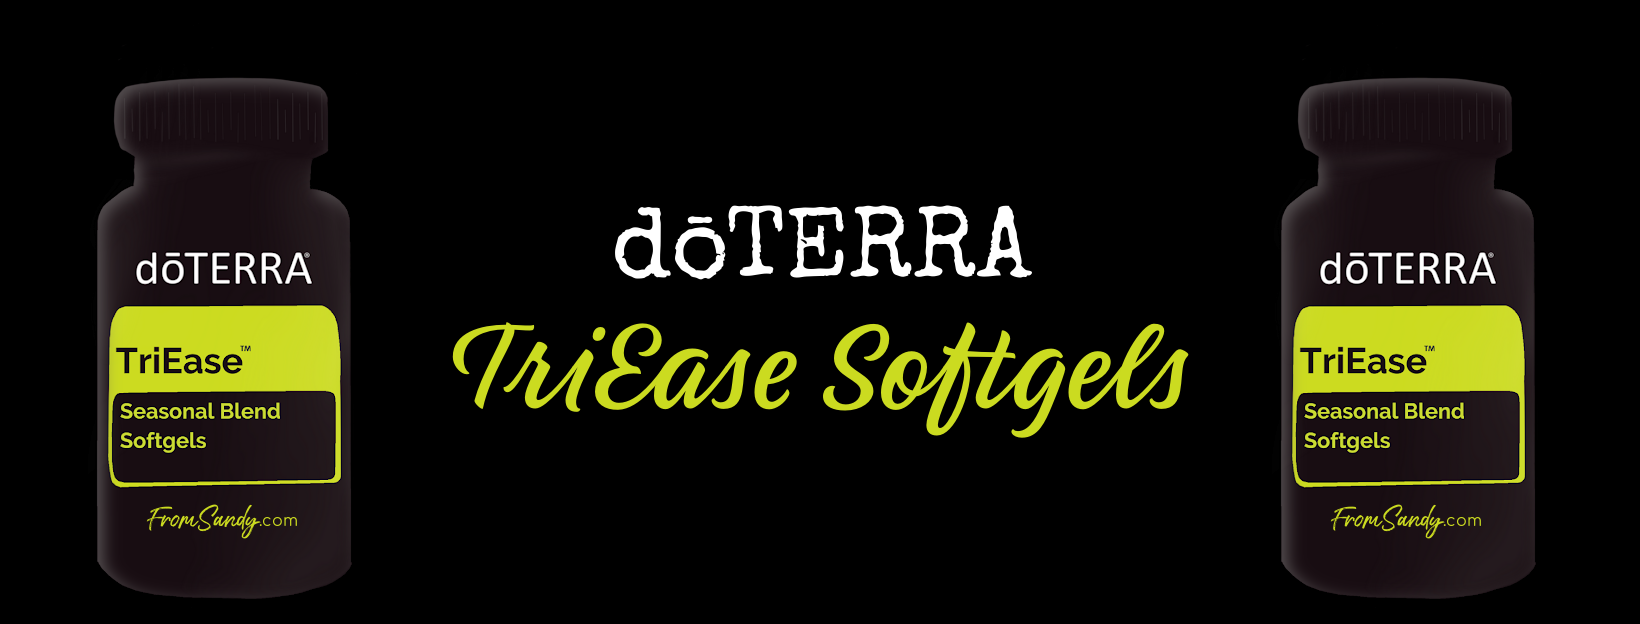 dōTERRA TriEase Softgels | From Sandy